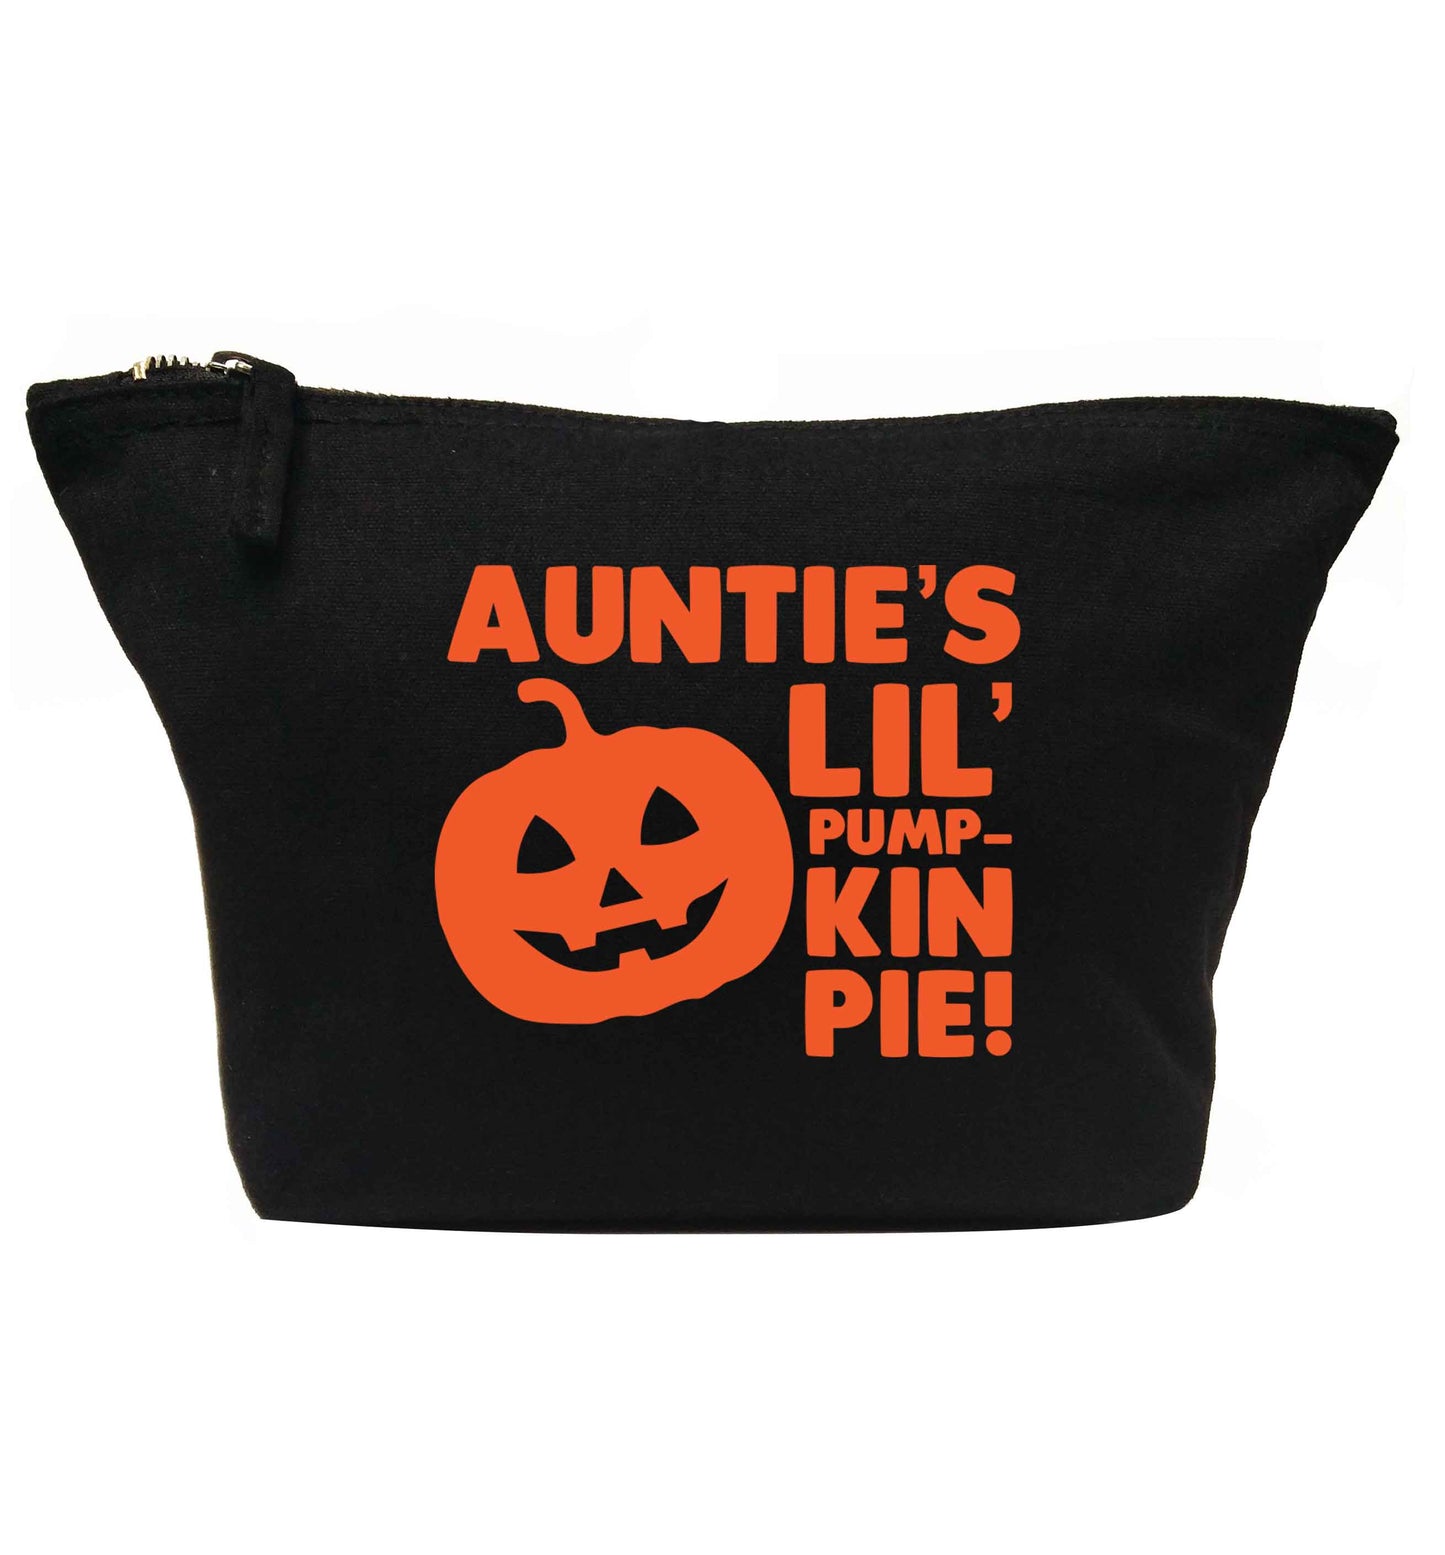 Auntie's lil' pumpkin pie | Makeup / wash bag